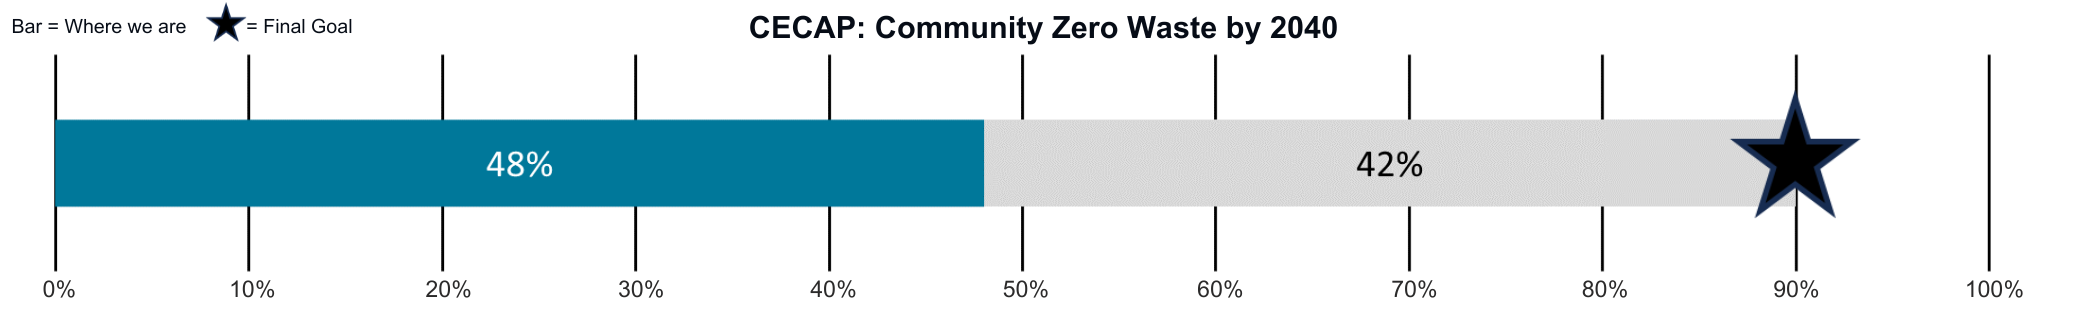 CECAP_ Achieve community Zero Waste by 2040 with progress at 48%